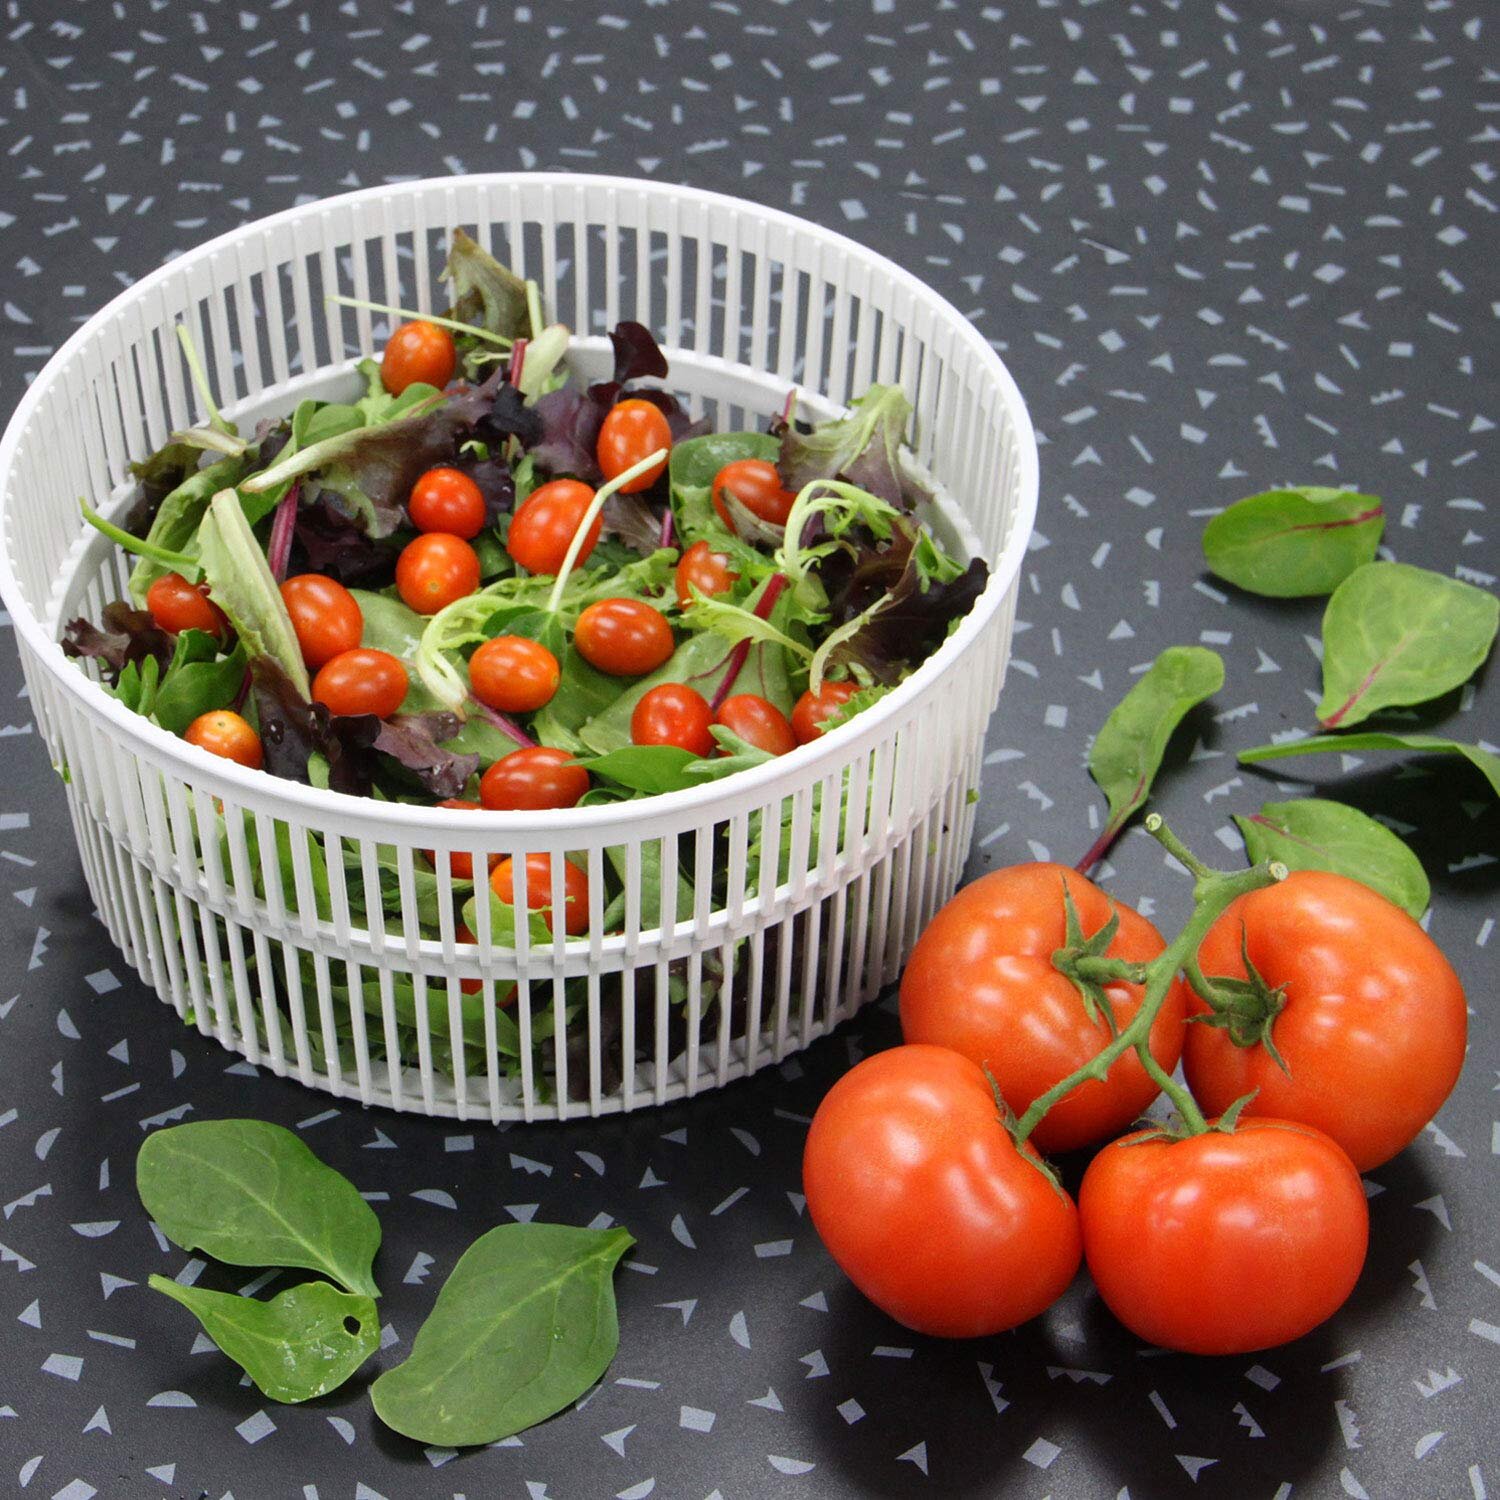 Cuisinart Large Salad Spinner- Wash, Spin & Dry Salad Greens